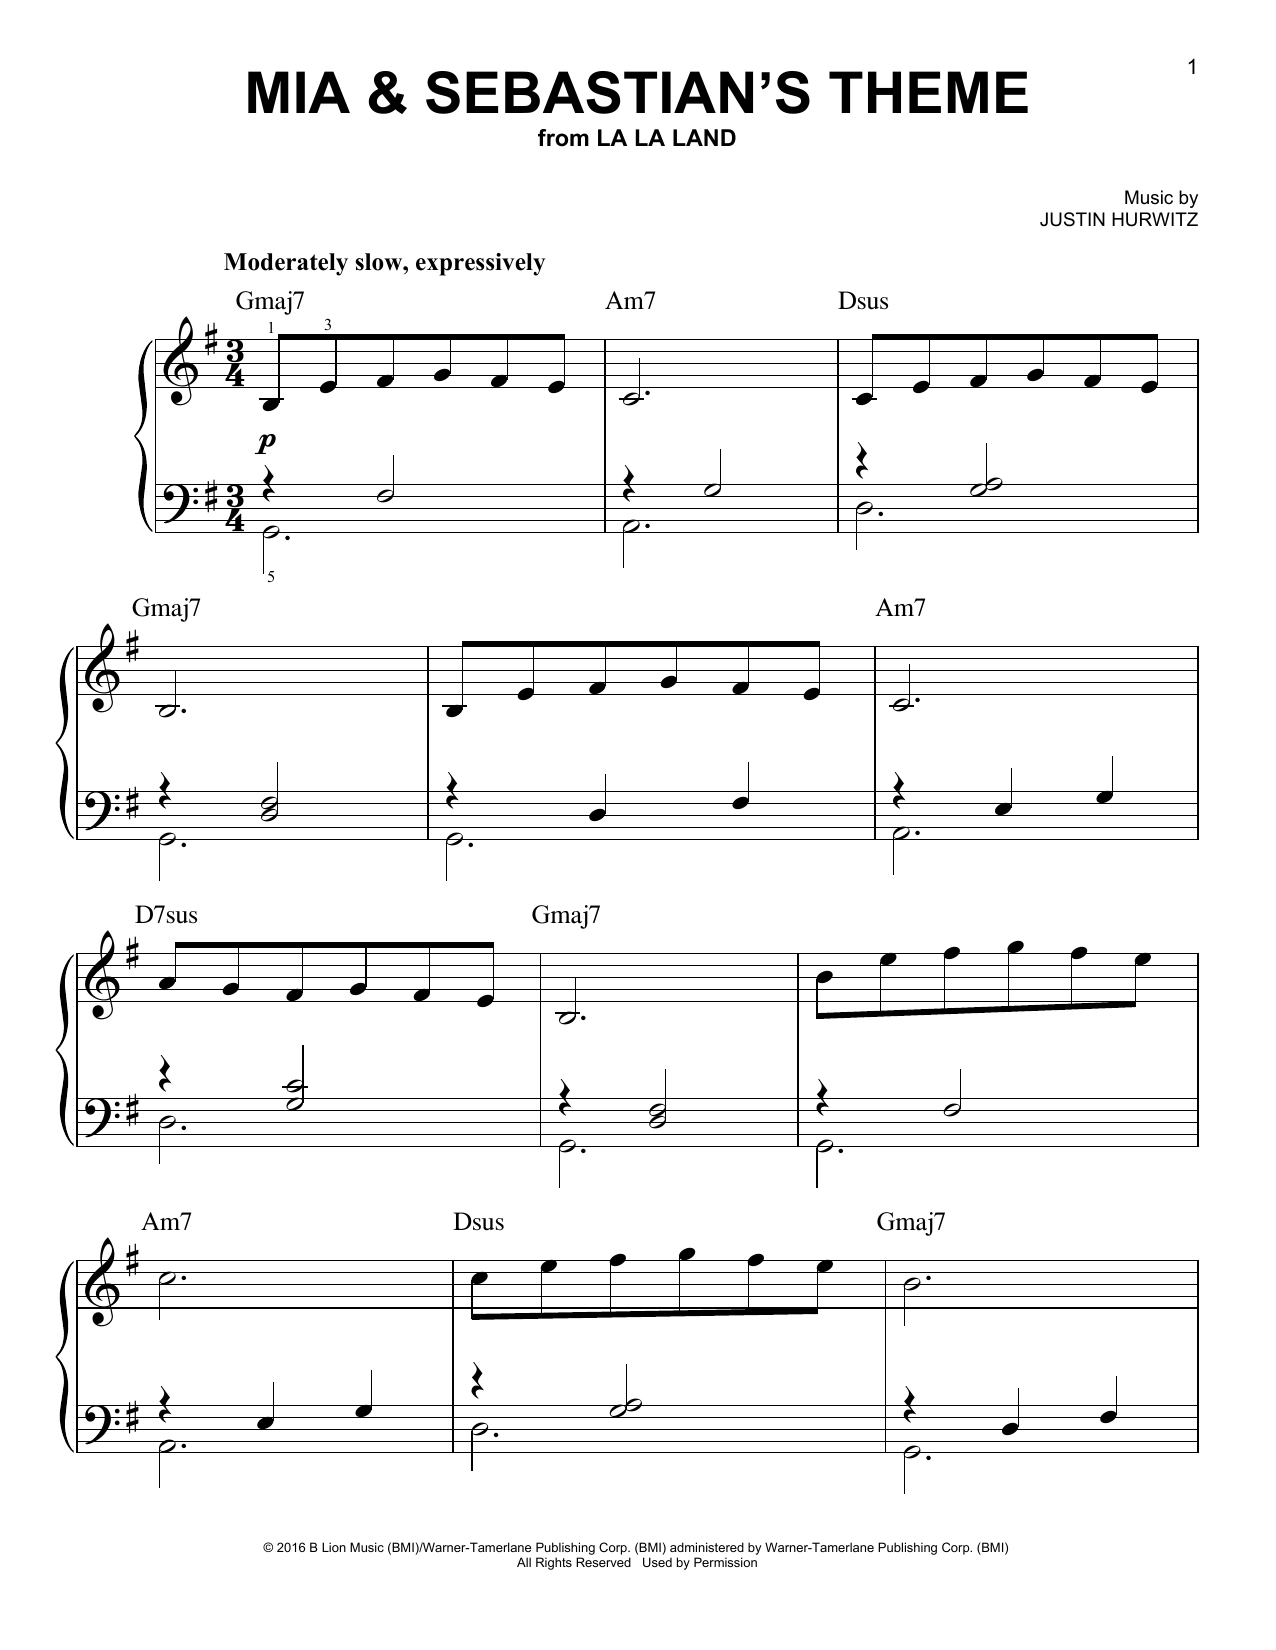 Justin Hurwitz Mia & Sebastian's Theme (from La La Land) sheet music notes and chords arranged for Violin and Piano